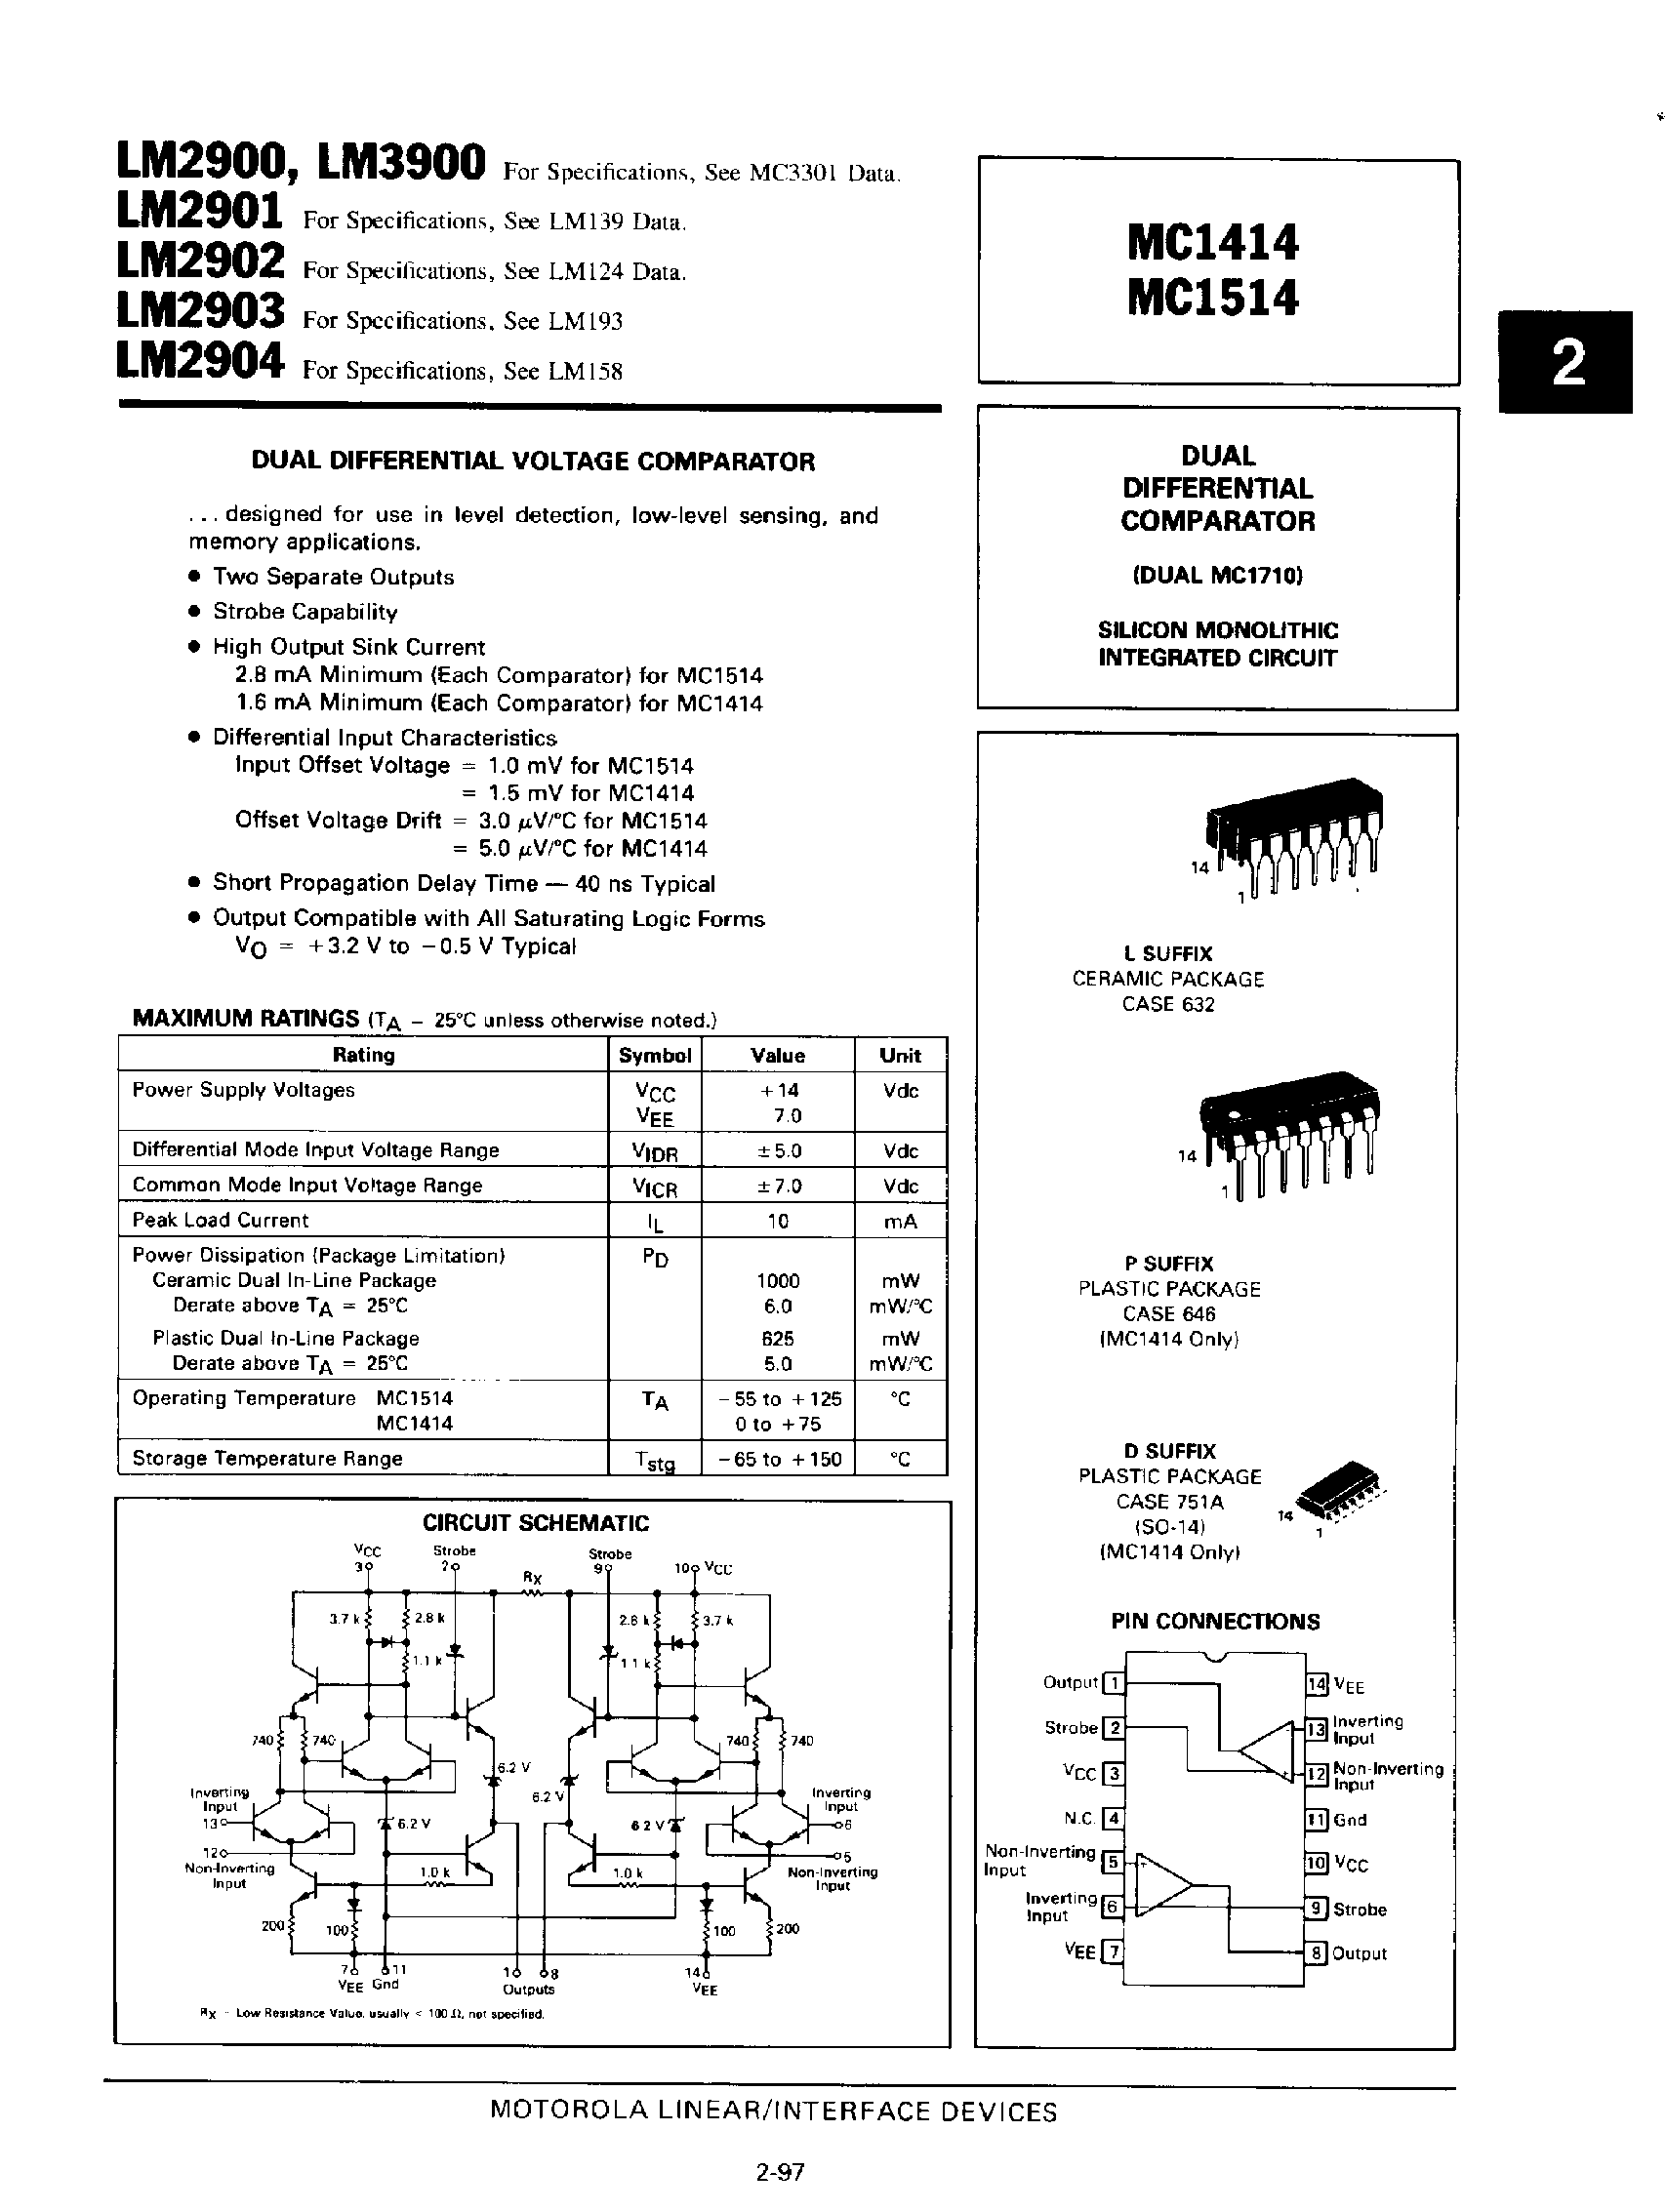 Даташит MC1414-(MC1414 / MC1514) DUAL DIFFERENTIAL COMPARATOR страница 1